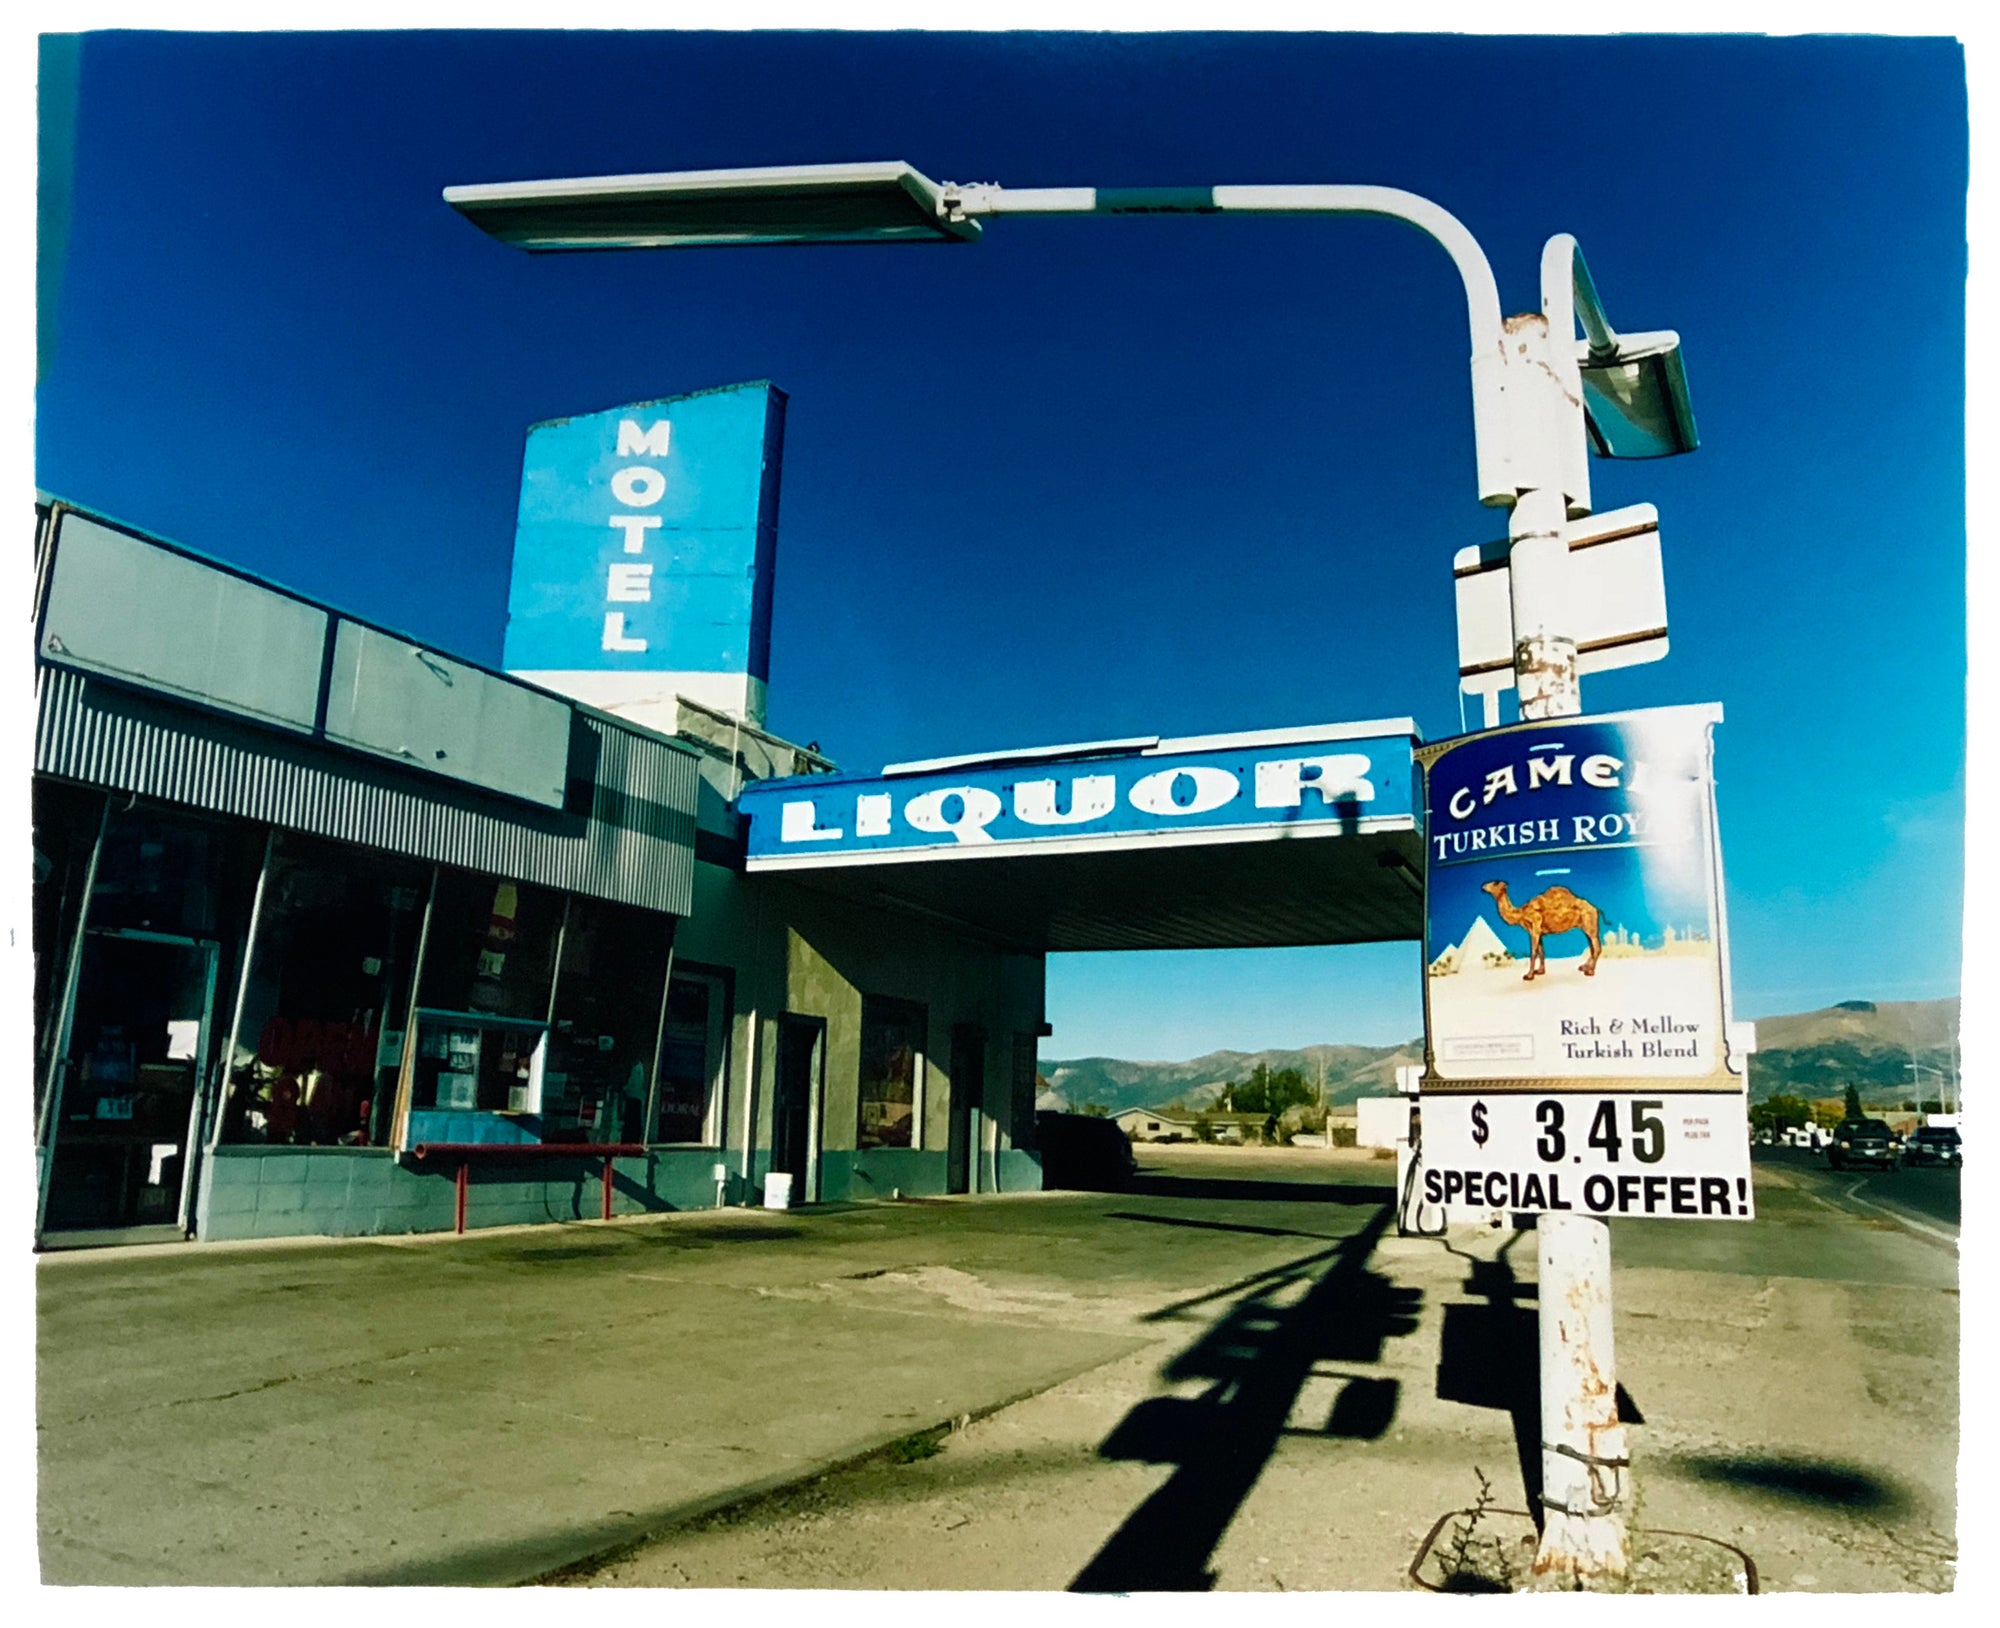 Monochrome blue photograph of a roadside America filling station artwork by Richard Heeps.